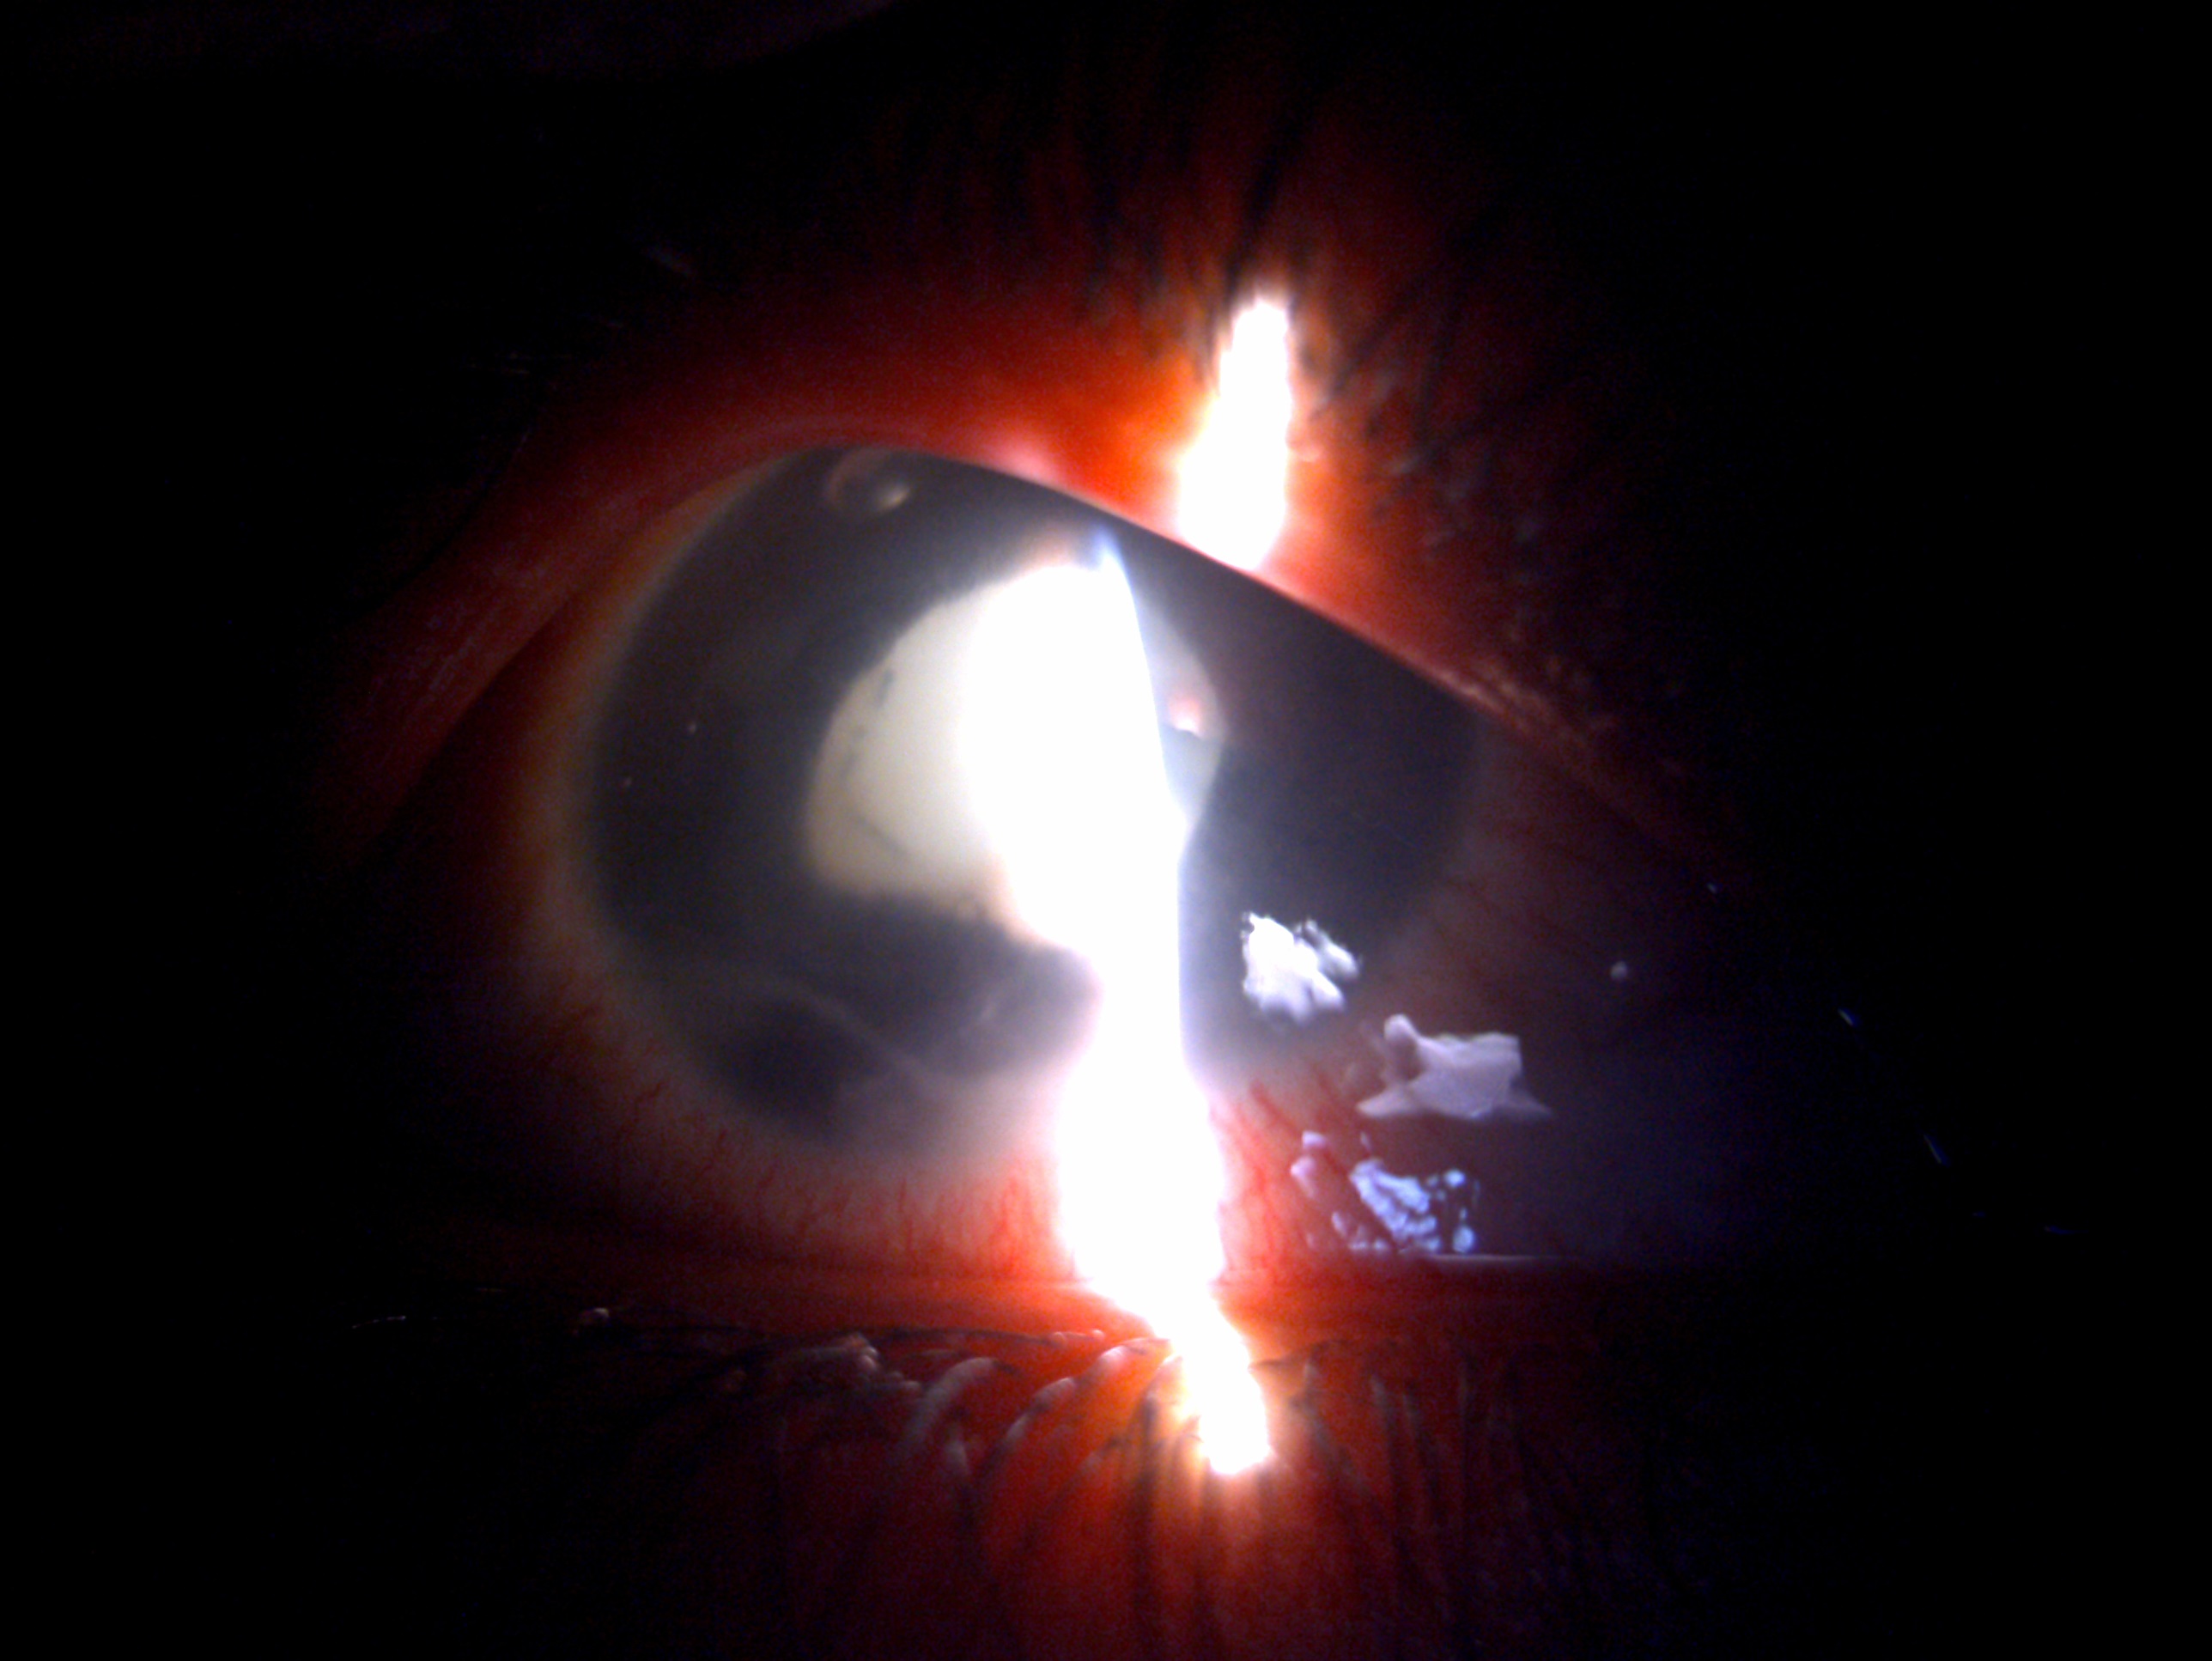 Digital slit lamp image of the patient depicting corneal tear with heteregenous lenticular opacity suggestive of lens abscess